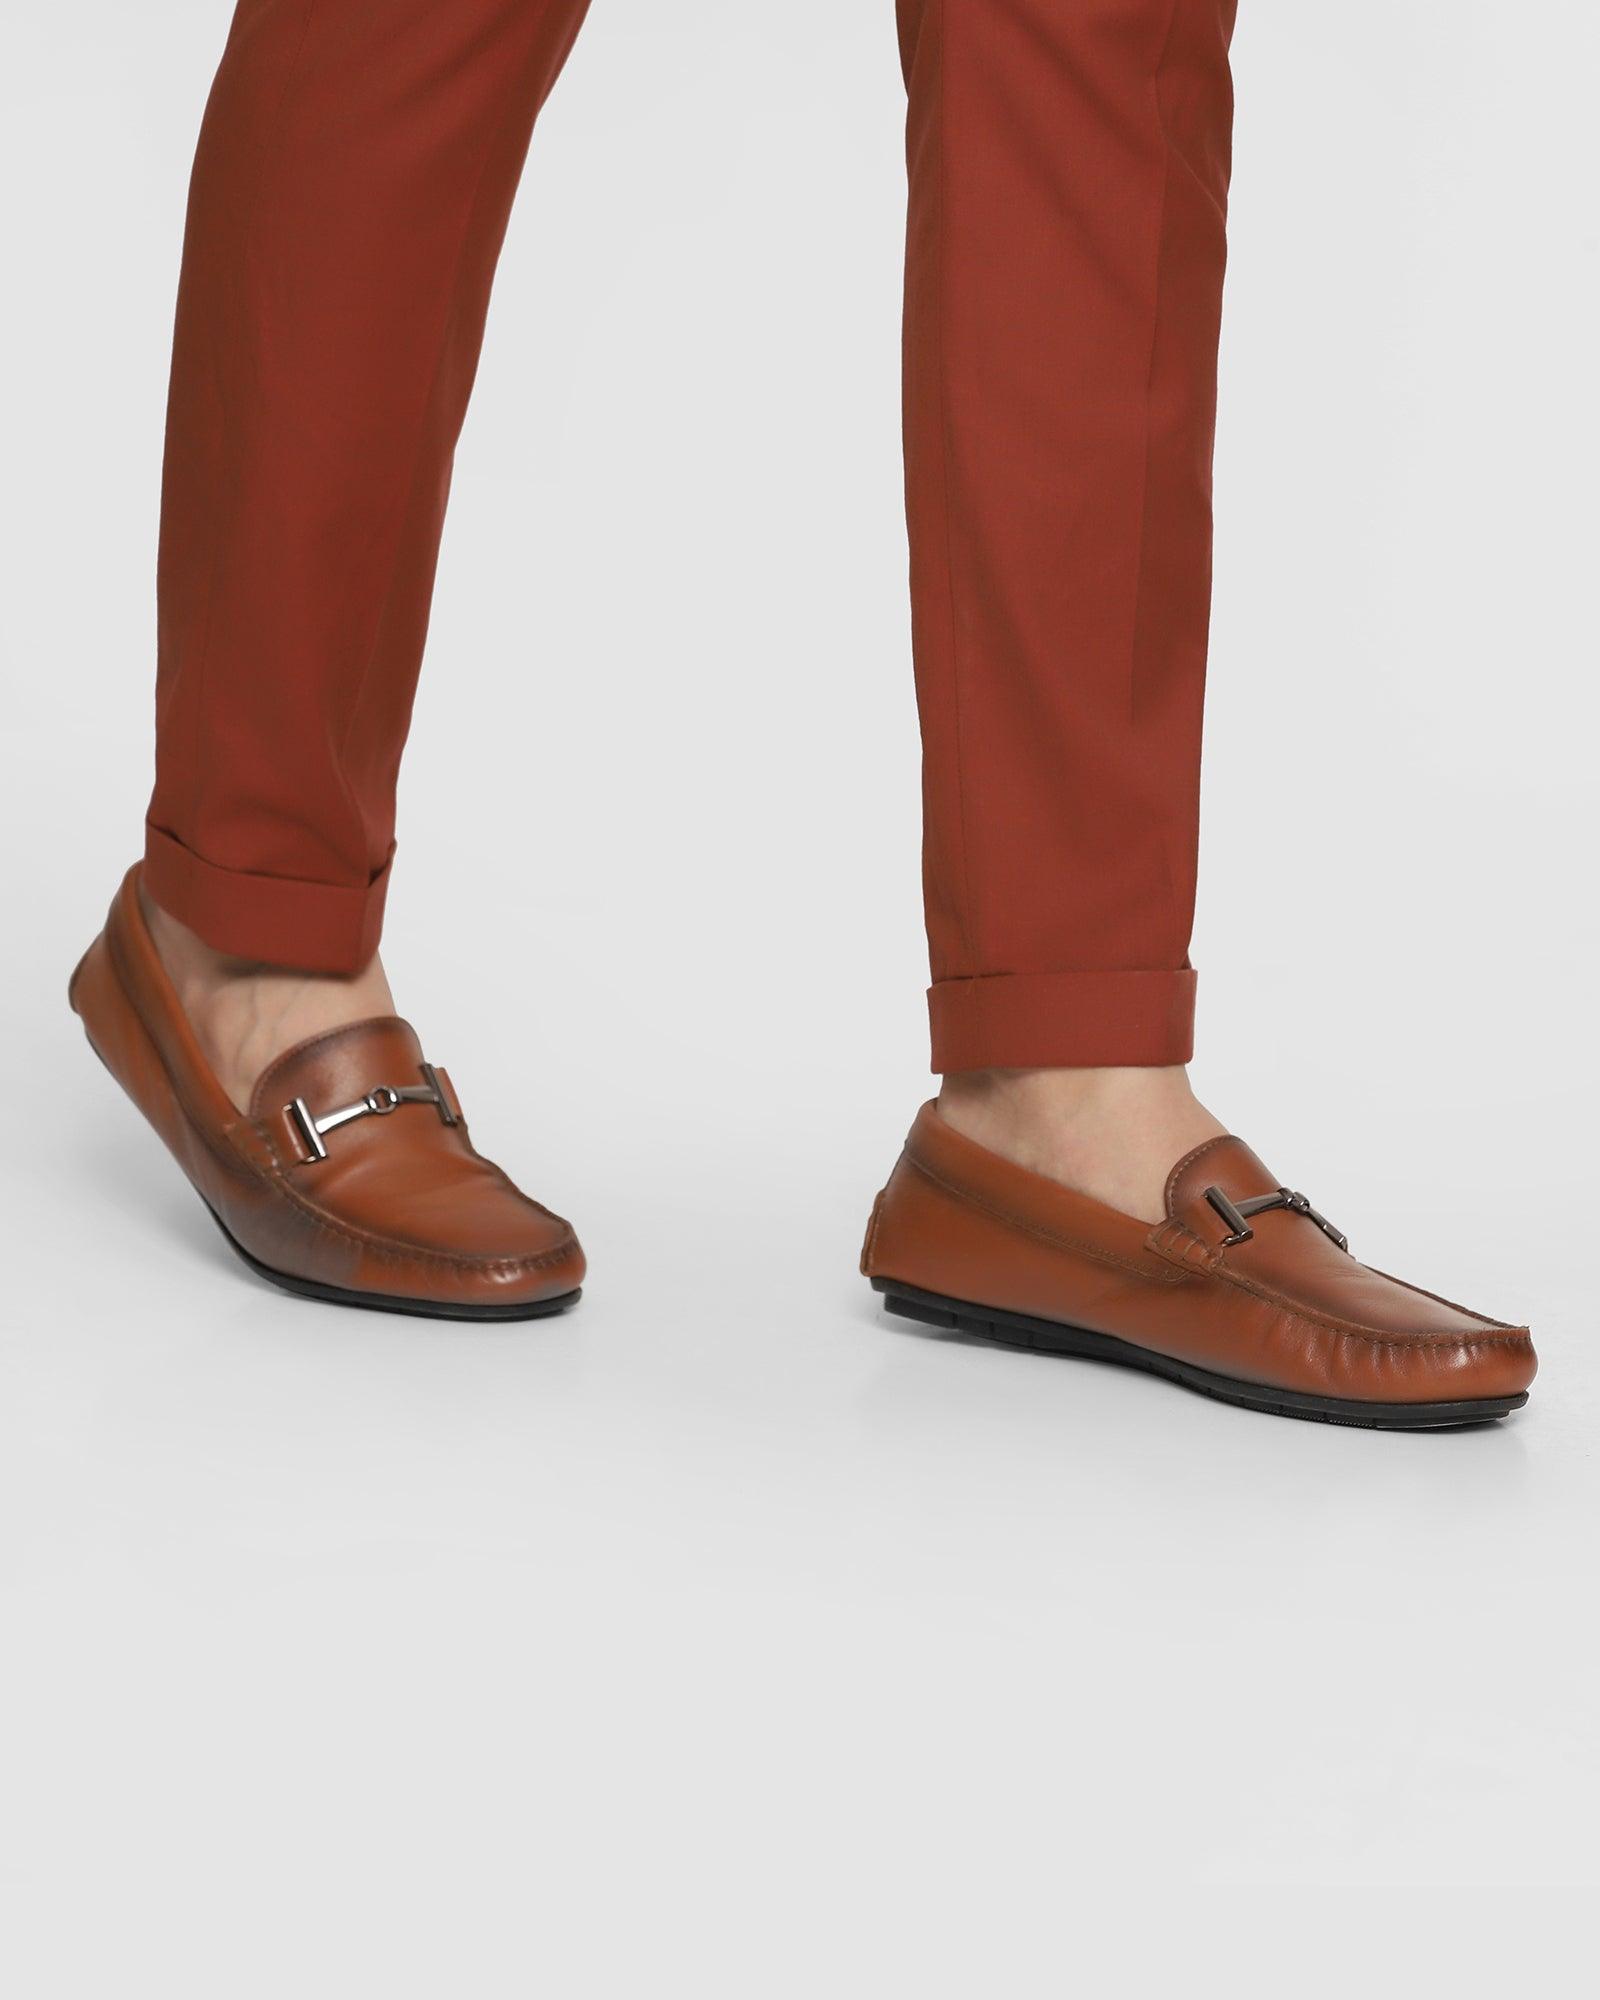 Super Slim Phoenix Formal Rust Solid Trouser - Saber